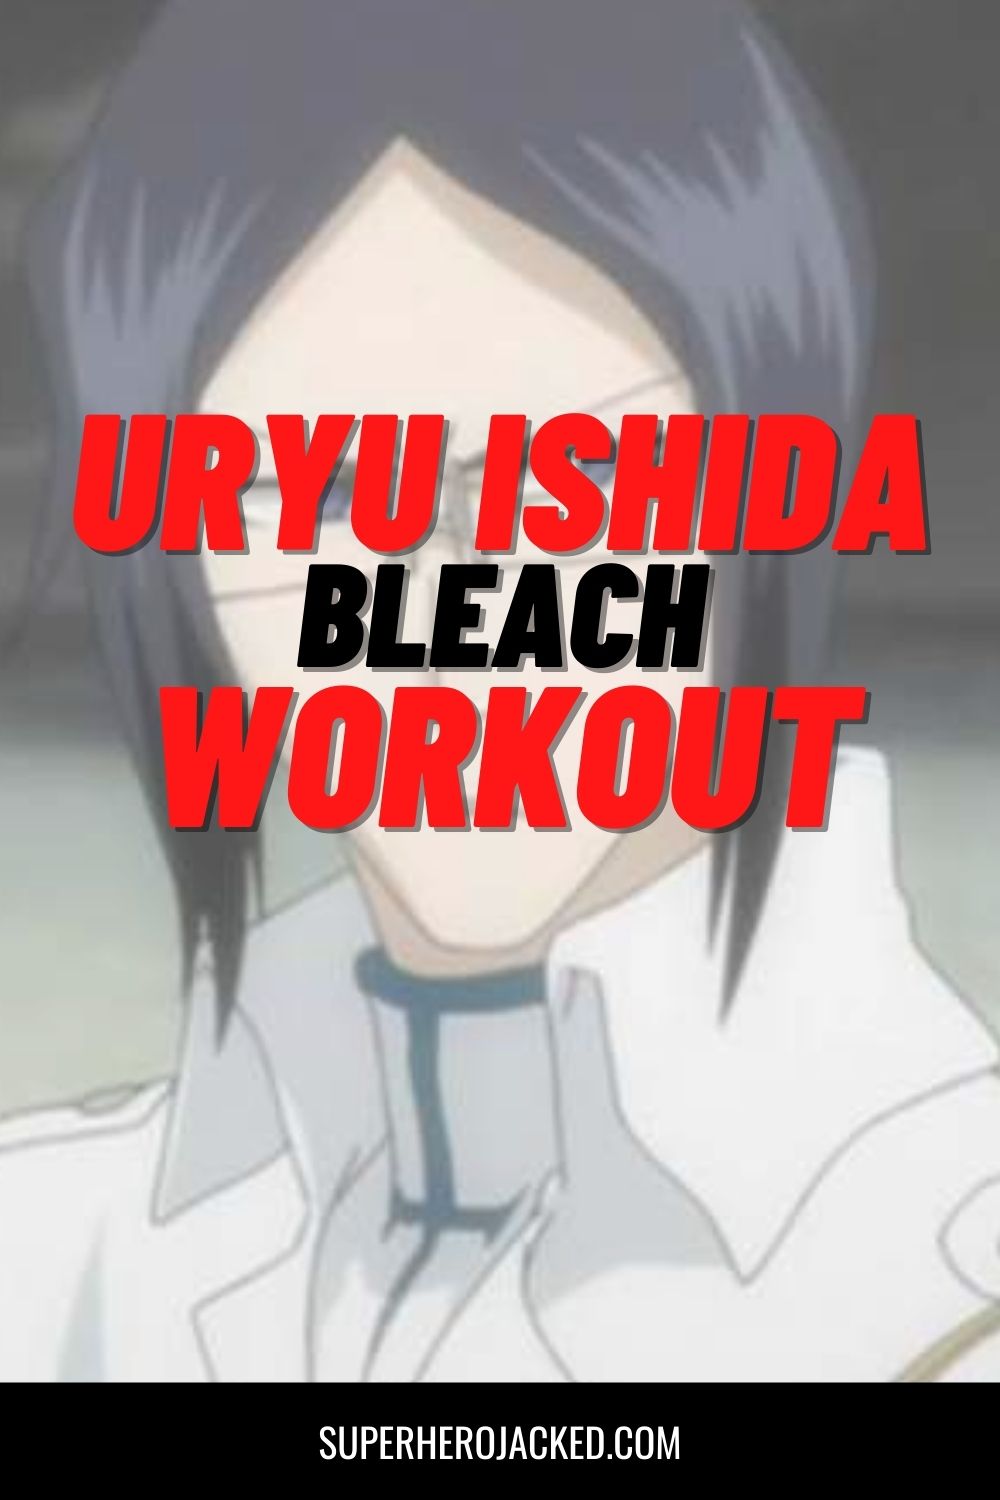 Uryu Ishida Workout: Train like The Bleach Doctor and Powerful Archer!